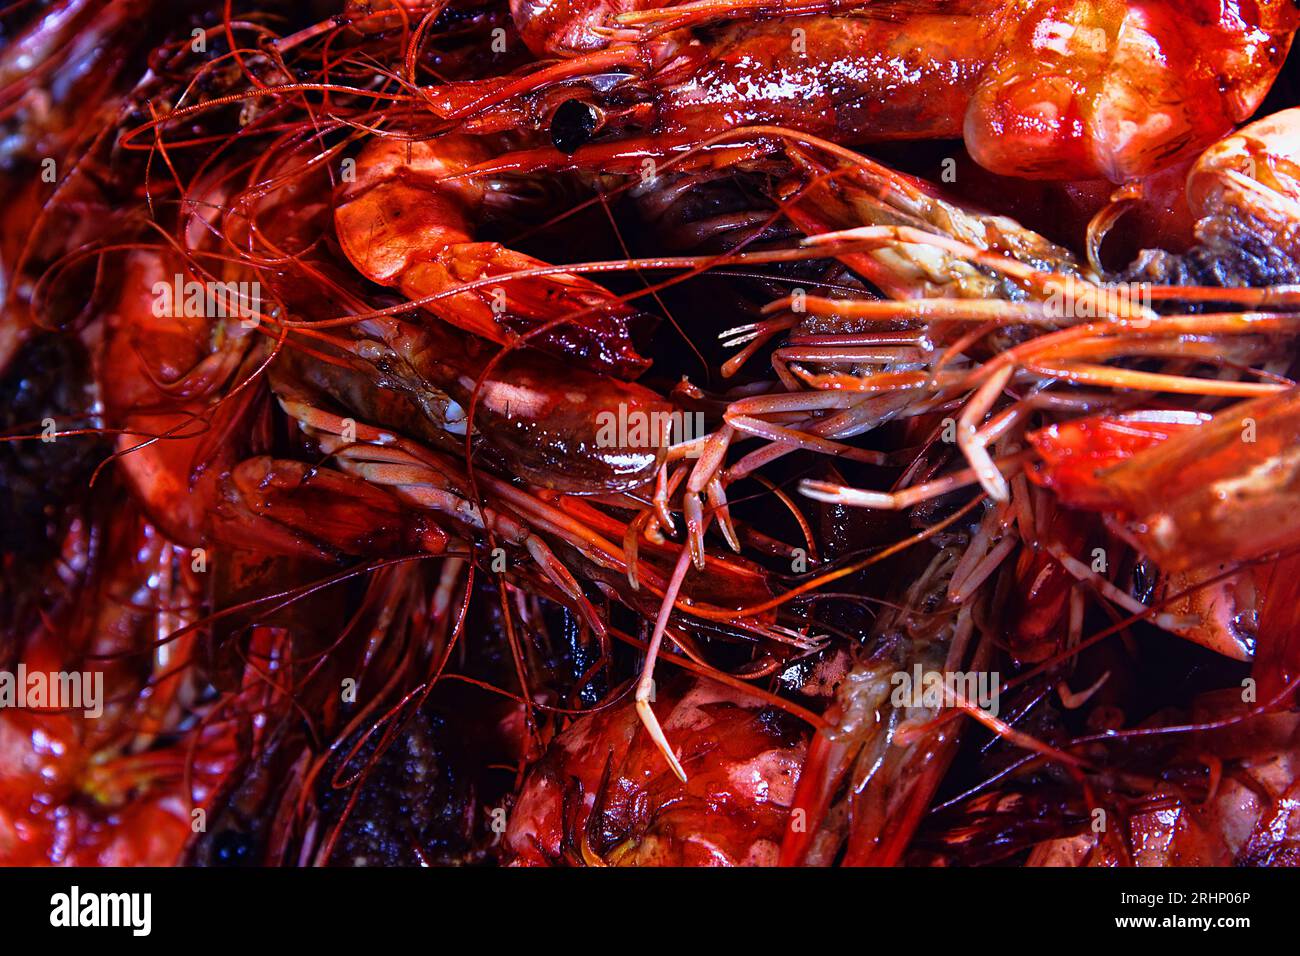 Oceanic freshly caught shrimp with caviar. Sri Lanka Stock Photo